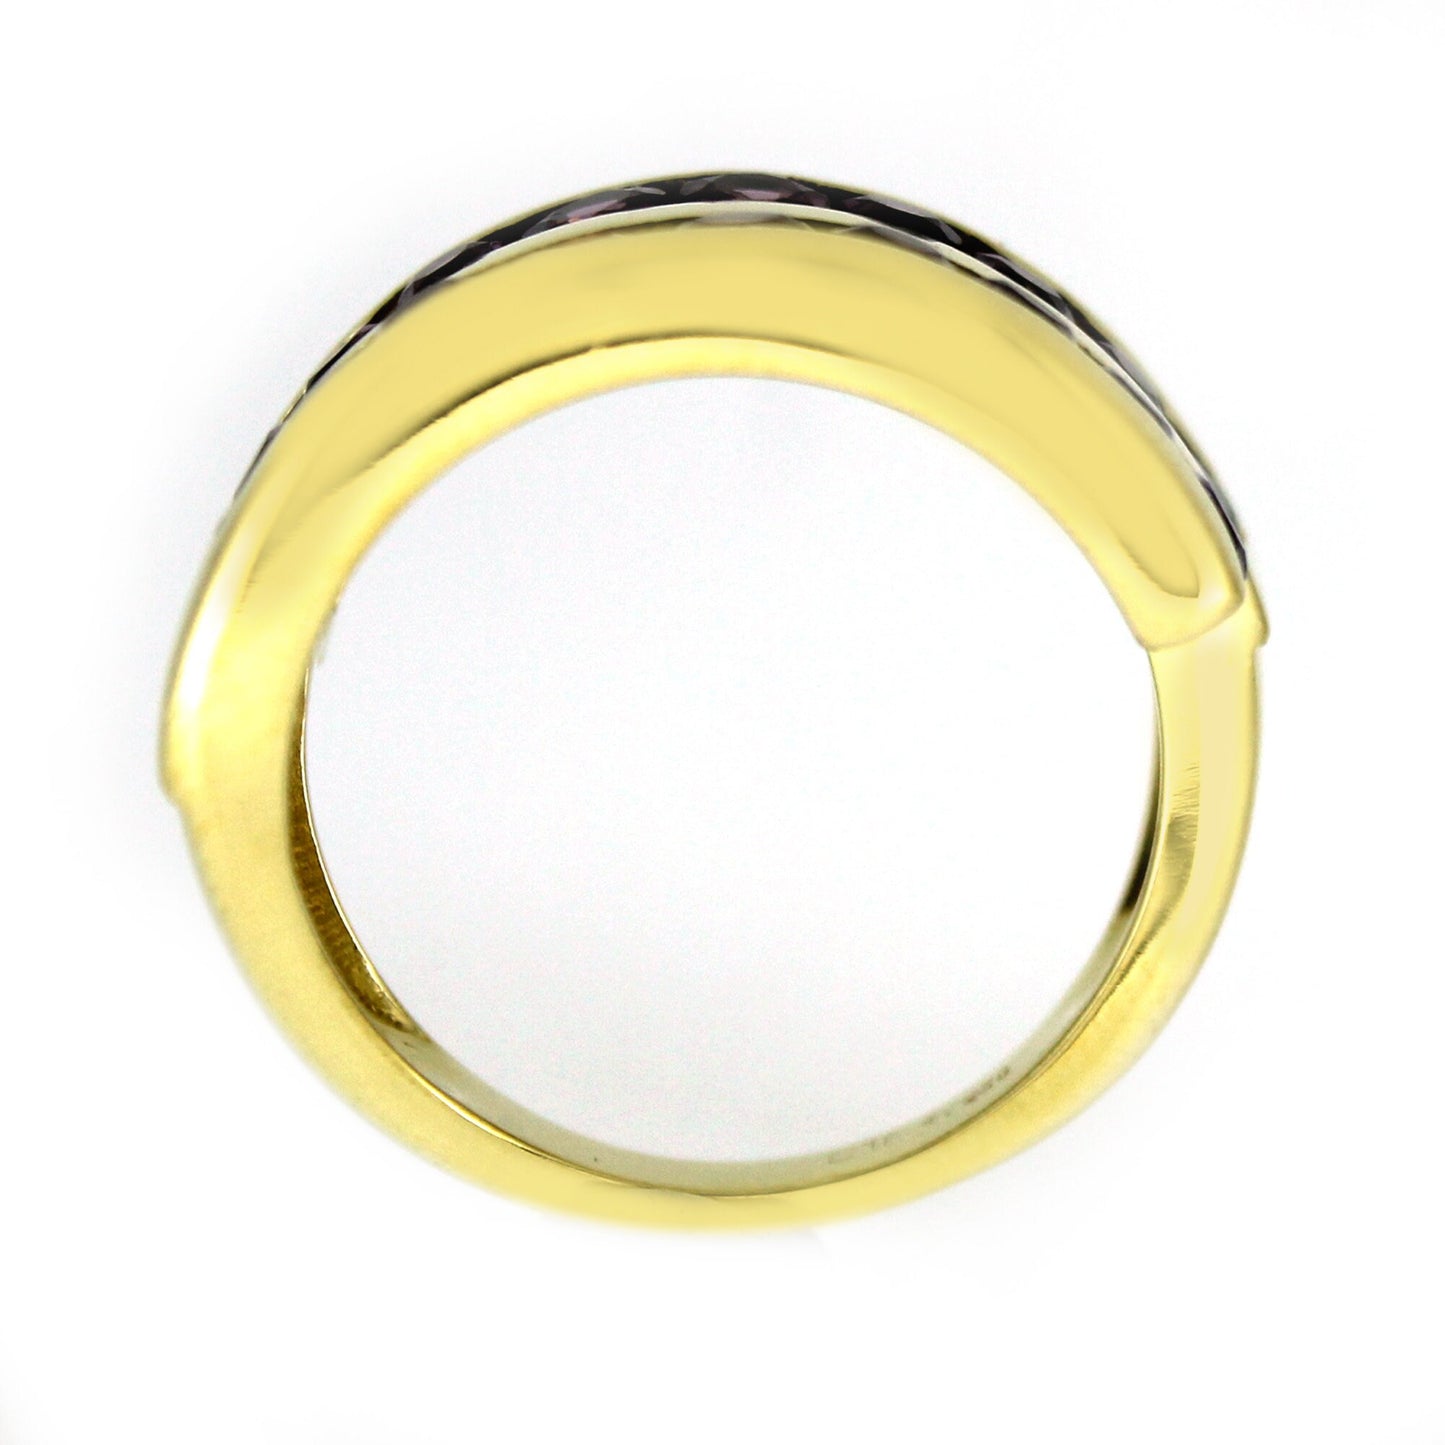 Rhodolite Garnet Gemstone Ring, 925 Sterling Silver Ring, Engagement Ring, Birthstone Ring-Gemstone Jewelry Anniversary Gift-Gift For Her